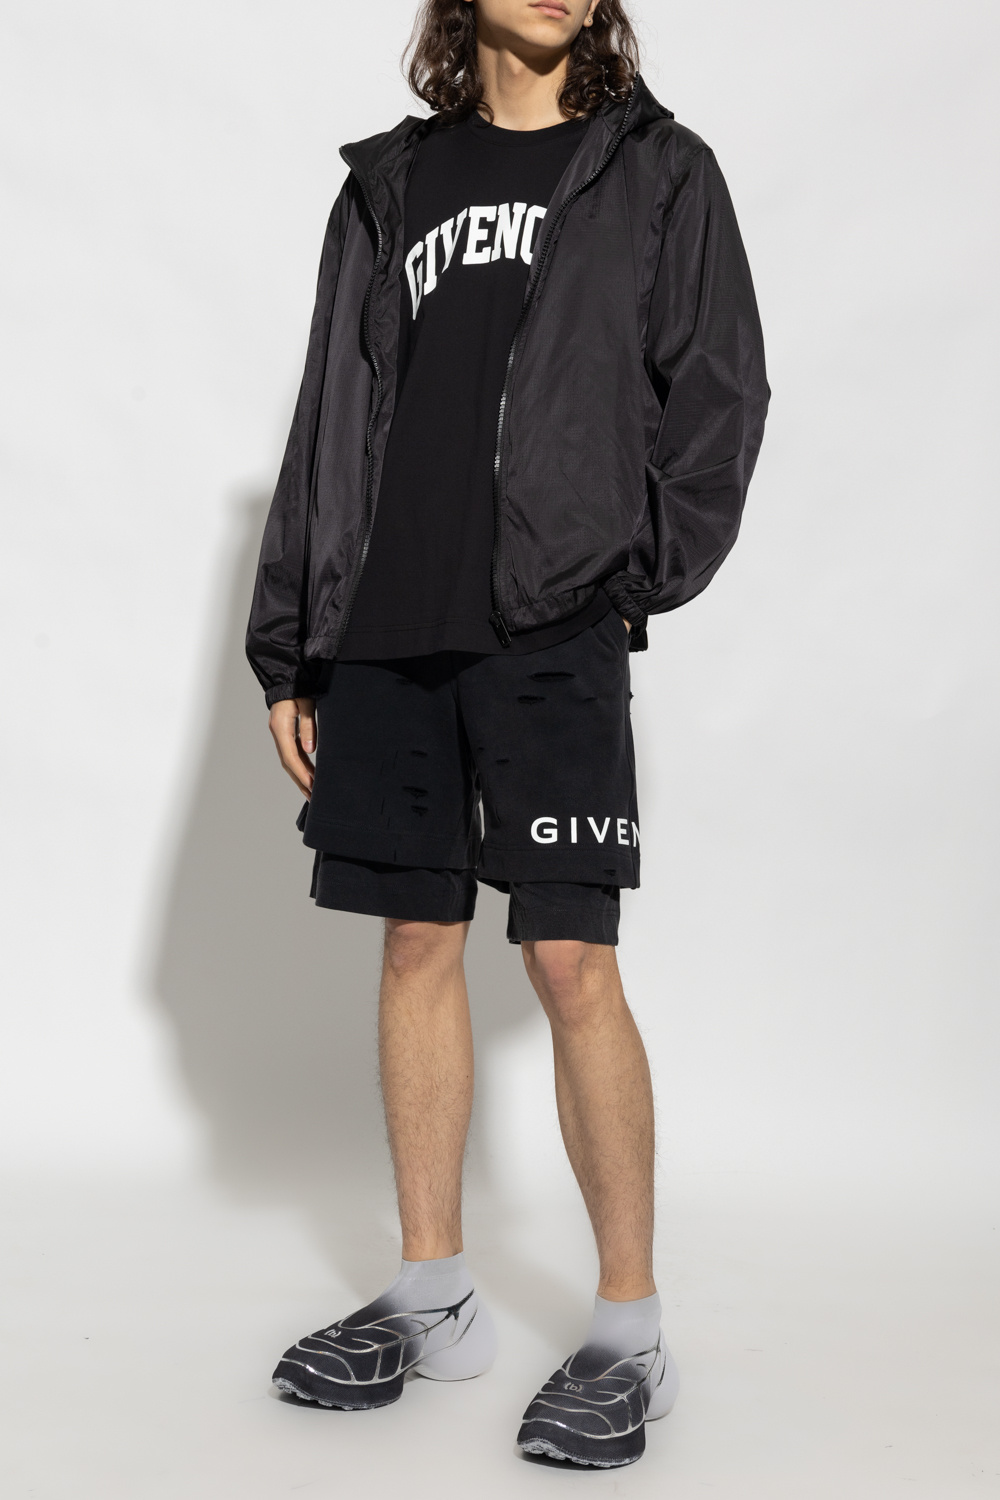 Givenchy Givenchy logo waistband pleated skirt